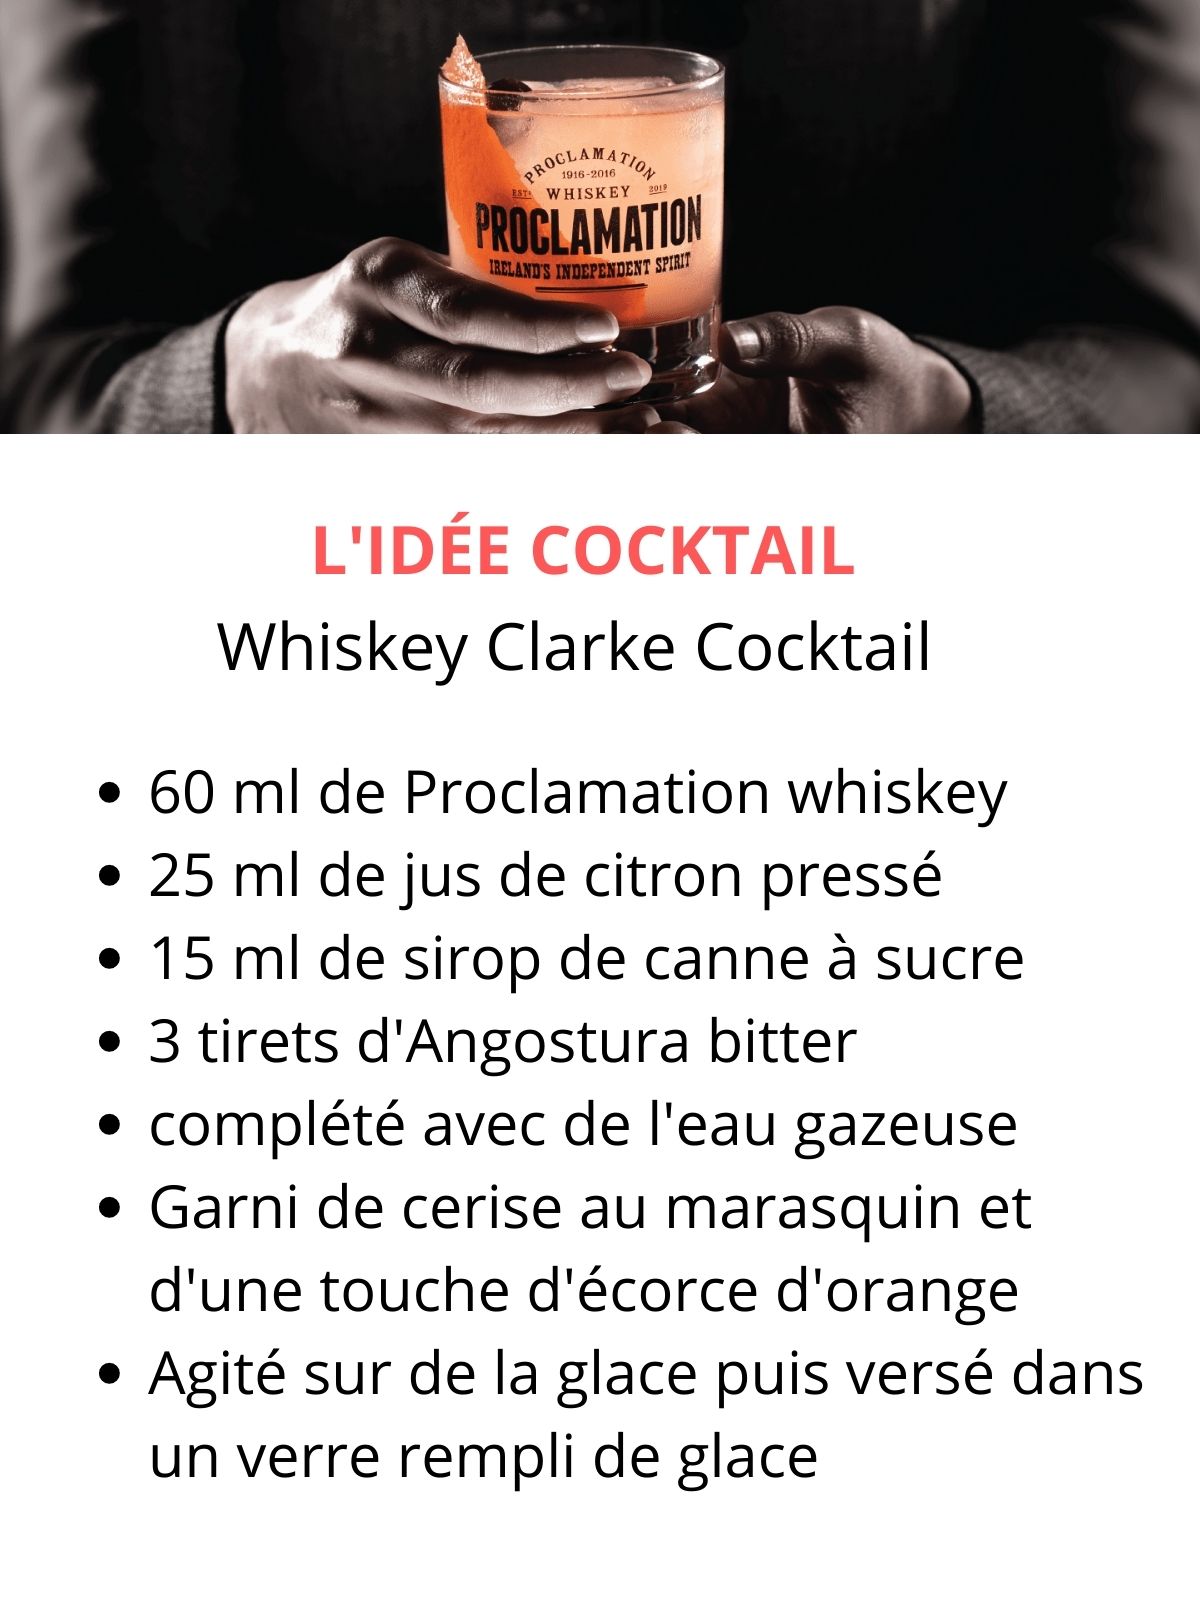 whiskey clarke cocktail